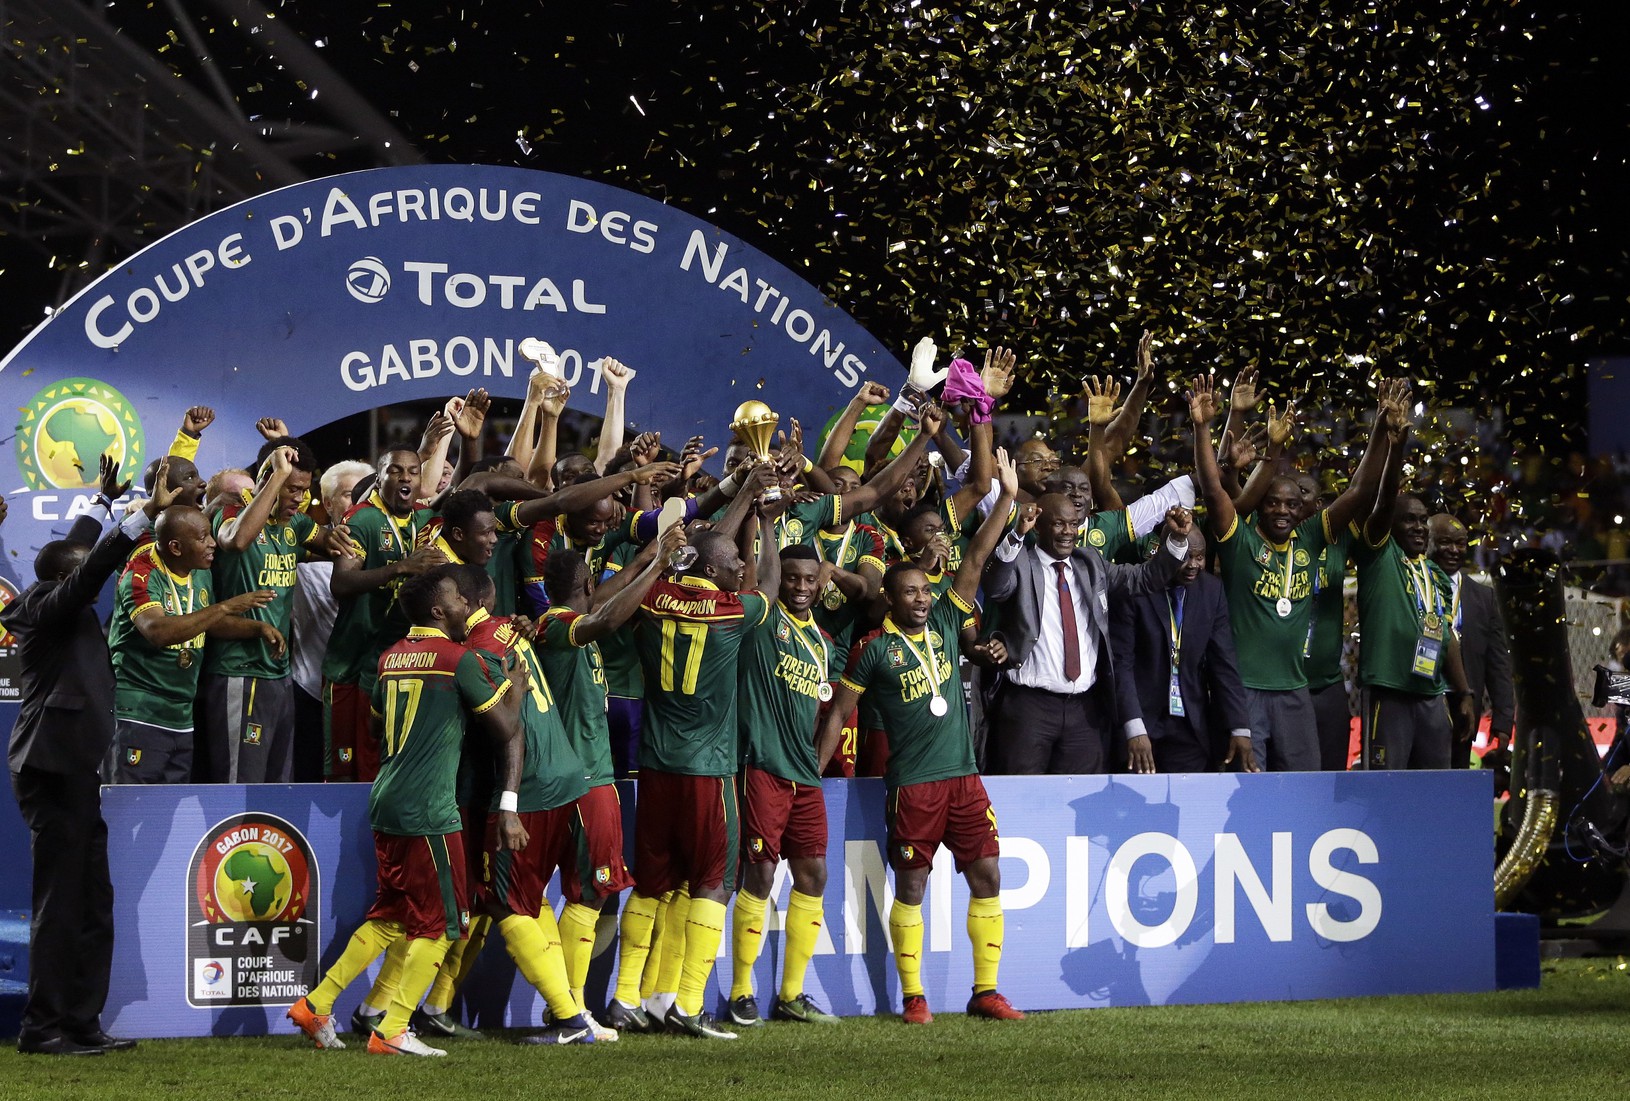 Kamerun zdolal vo finále